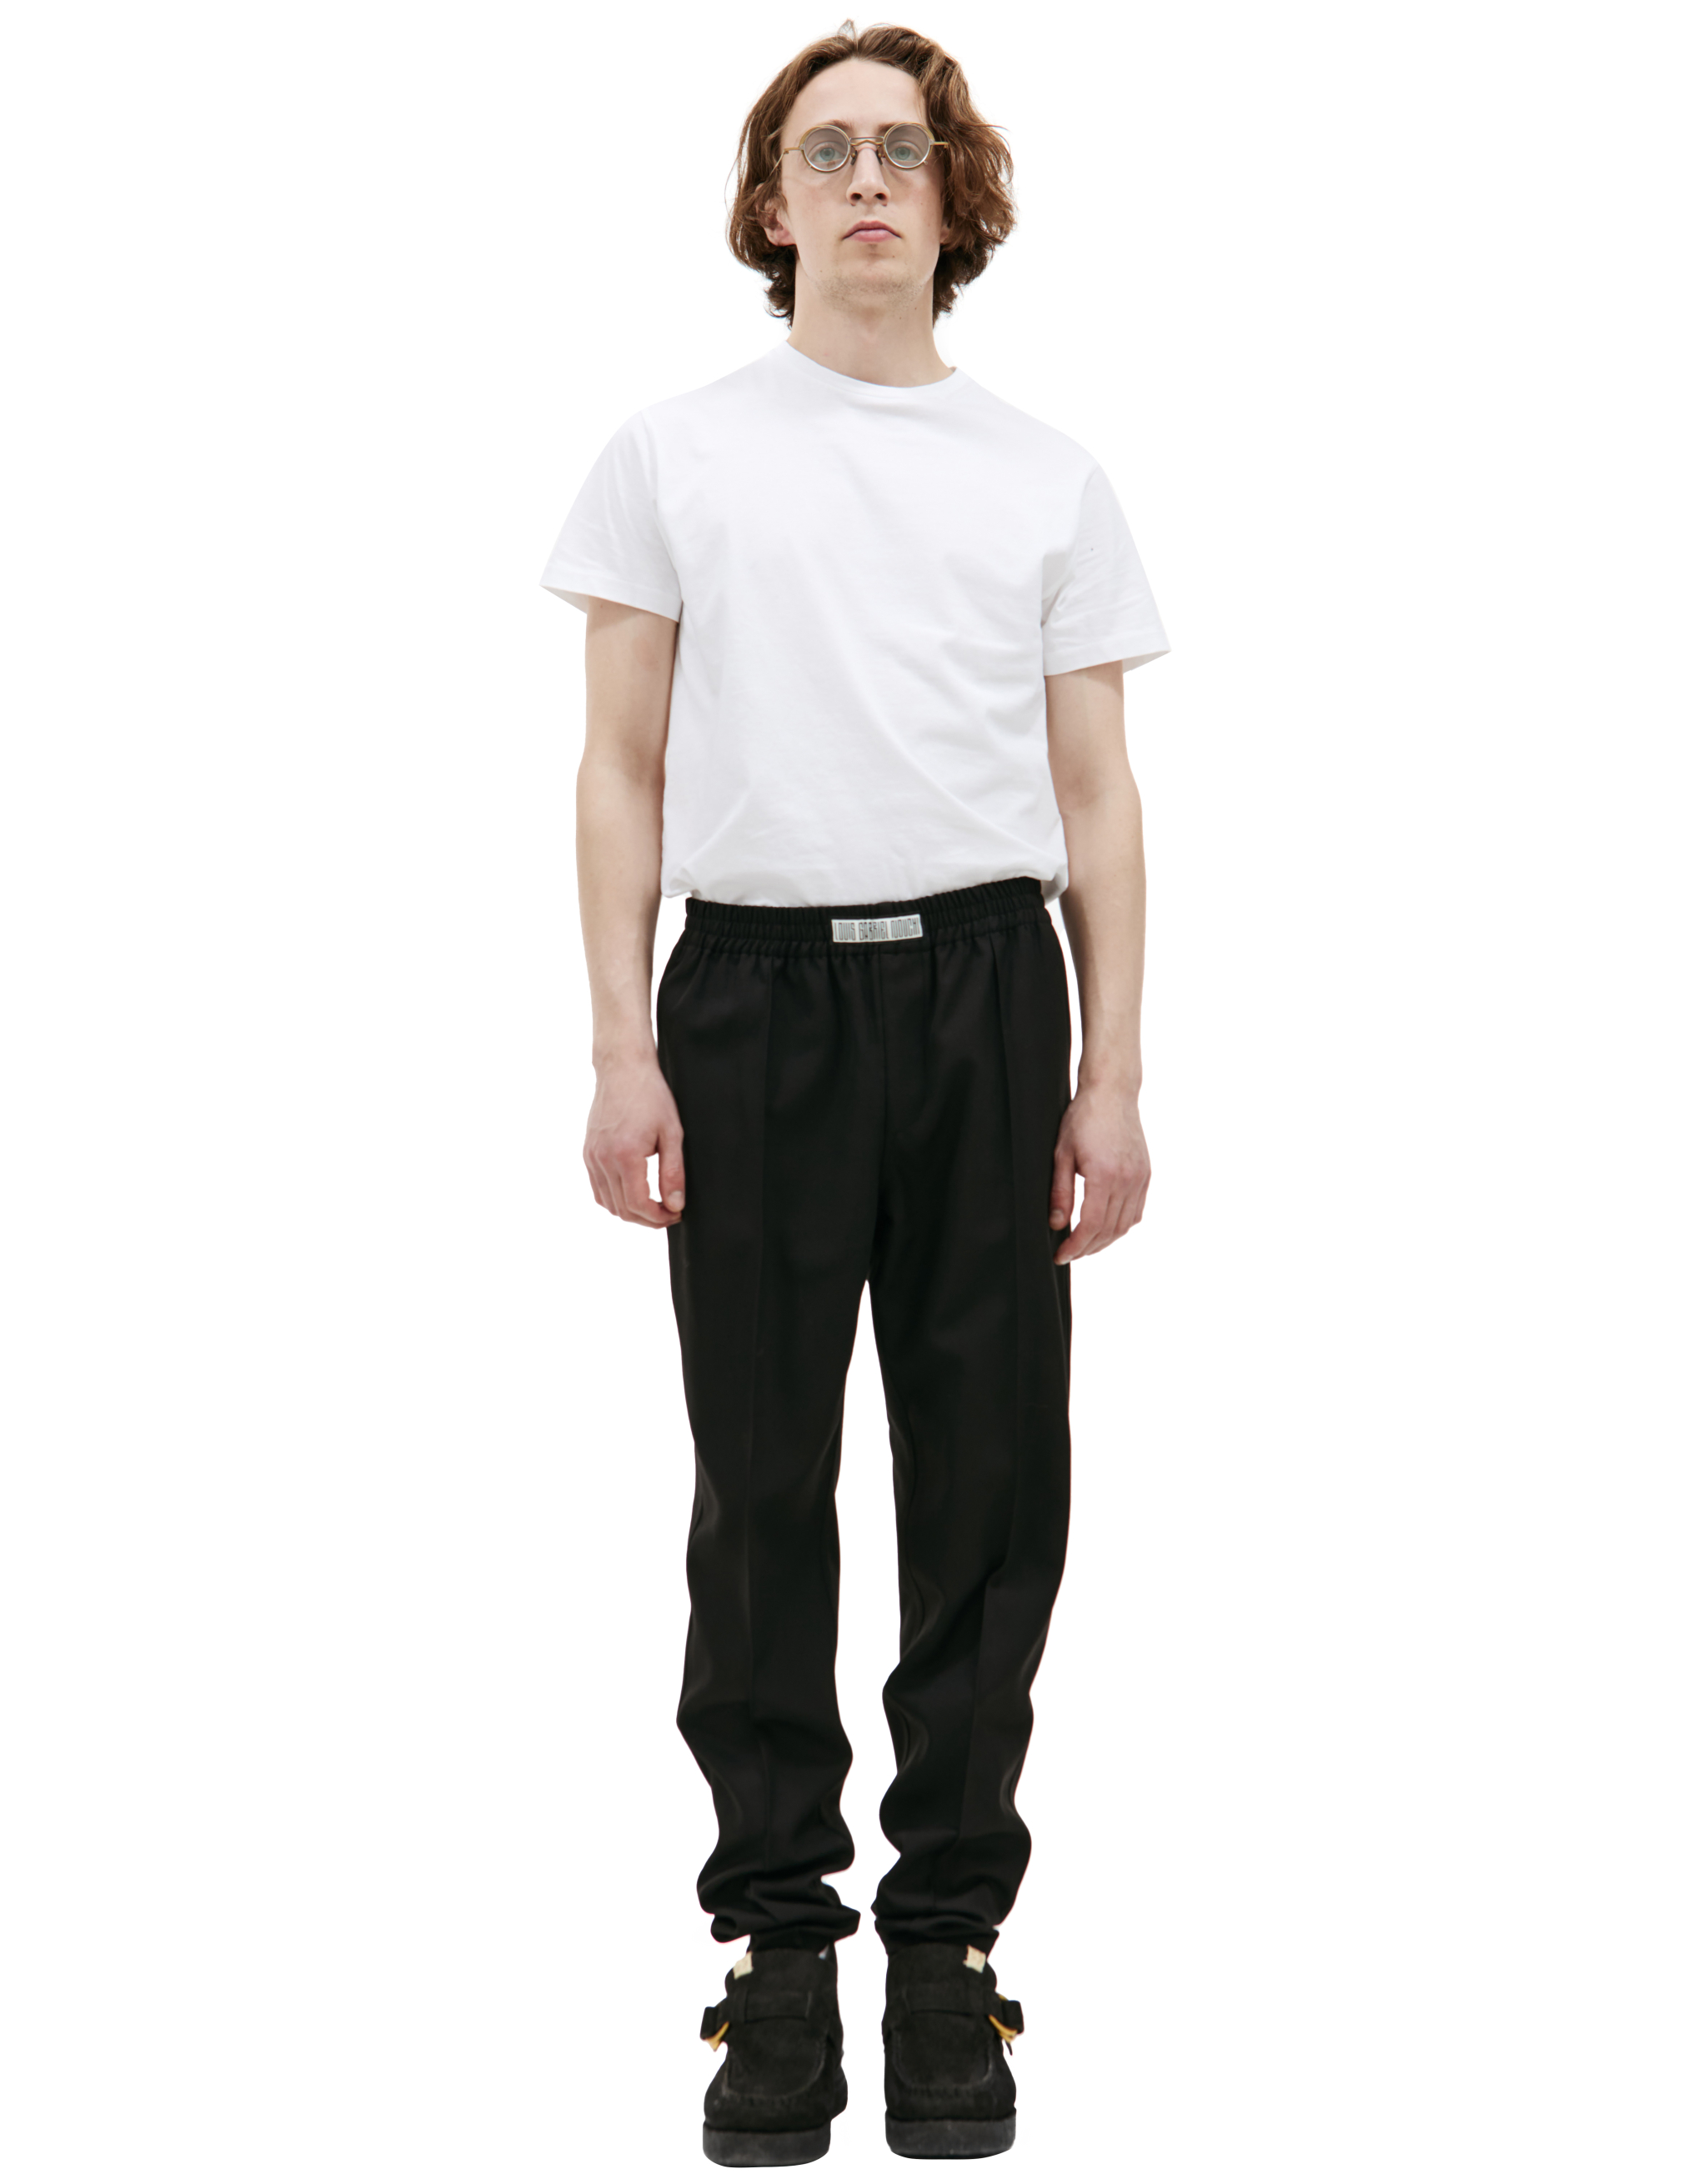 Прямые брюки со стрелками LOUIS GABRIEL NOUCHI 0711/T115/001, размер M;L;XL 0711/T115/001 - фото 1